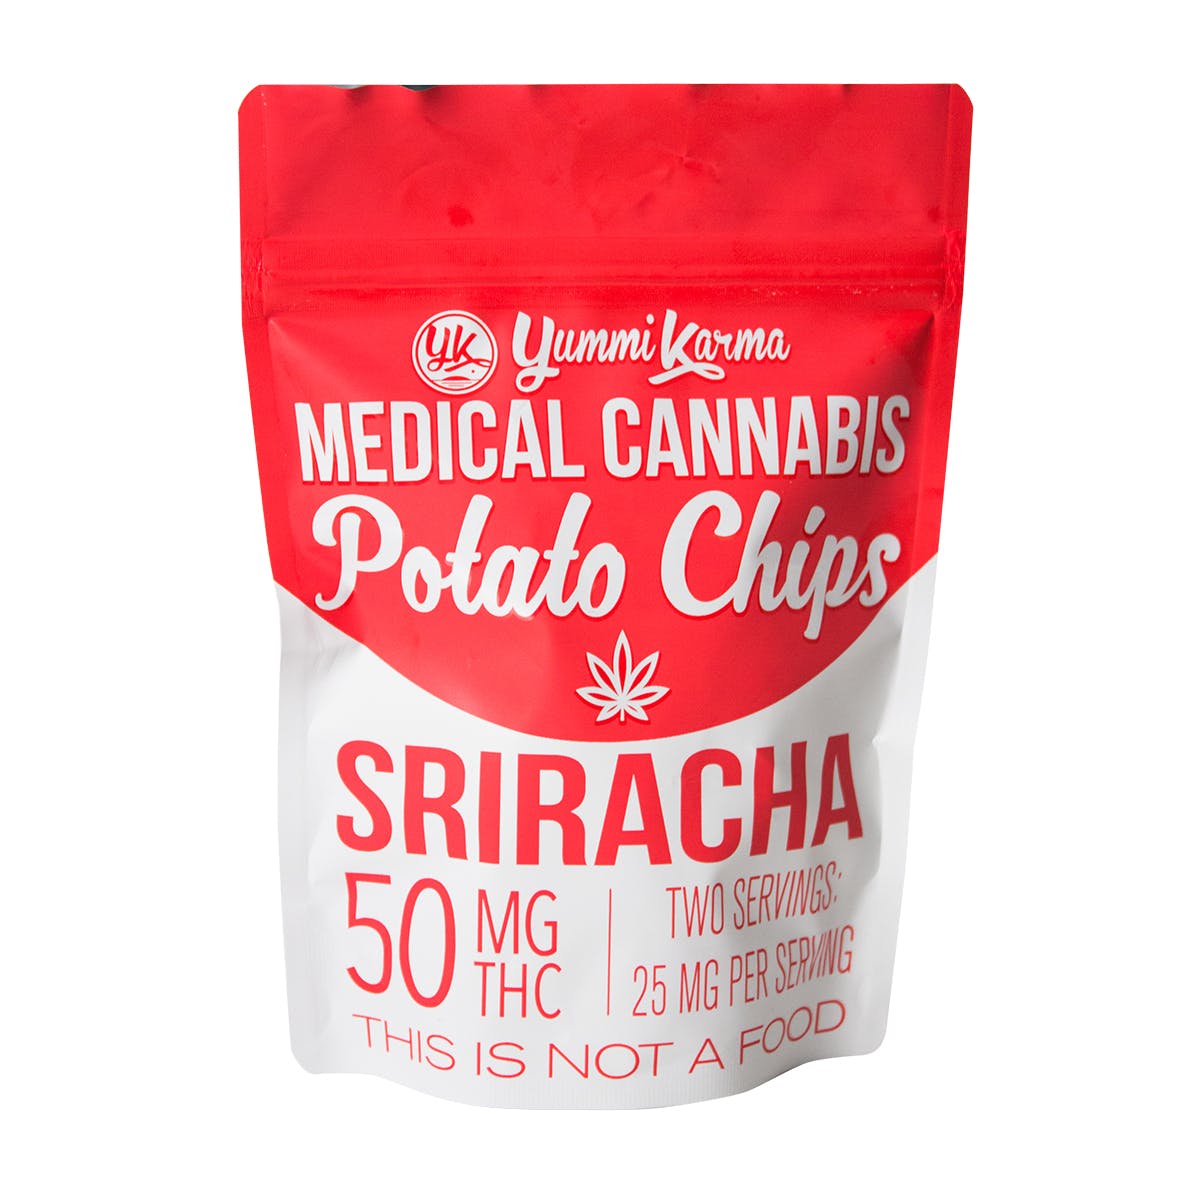 Medical Cannabis Potato Chips, Sriracha 50mg